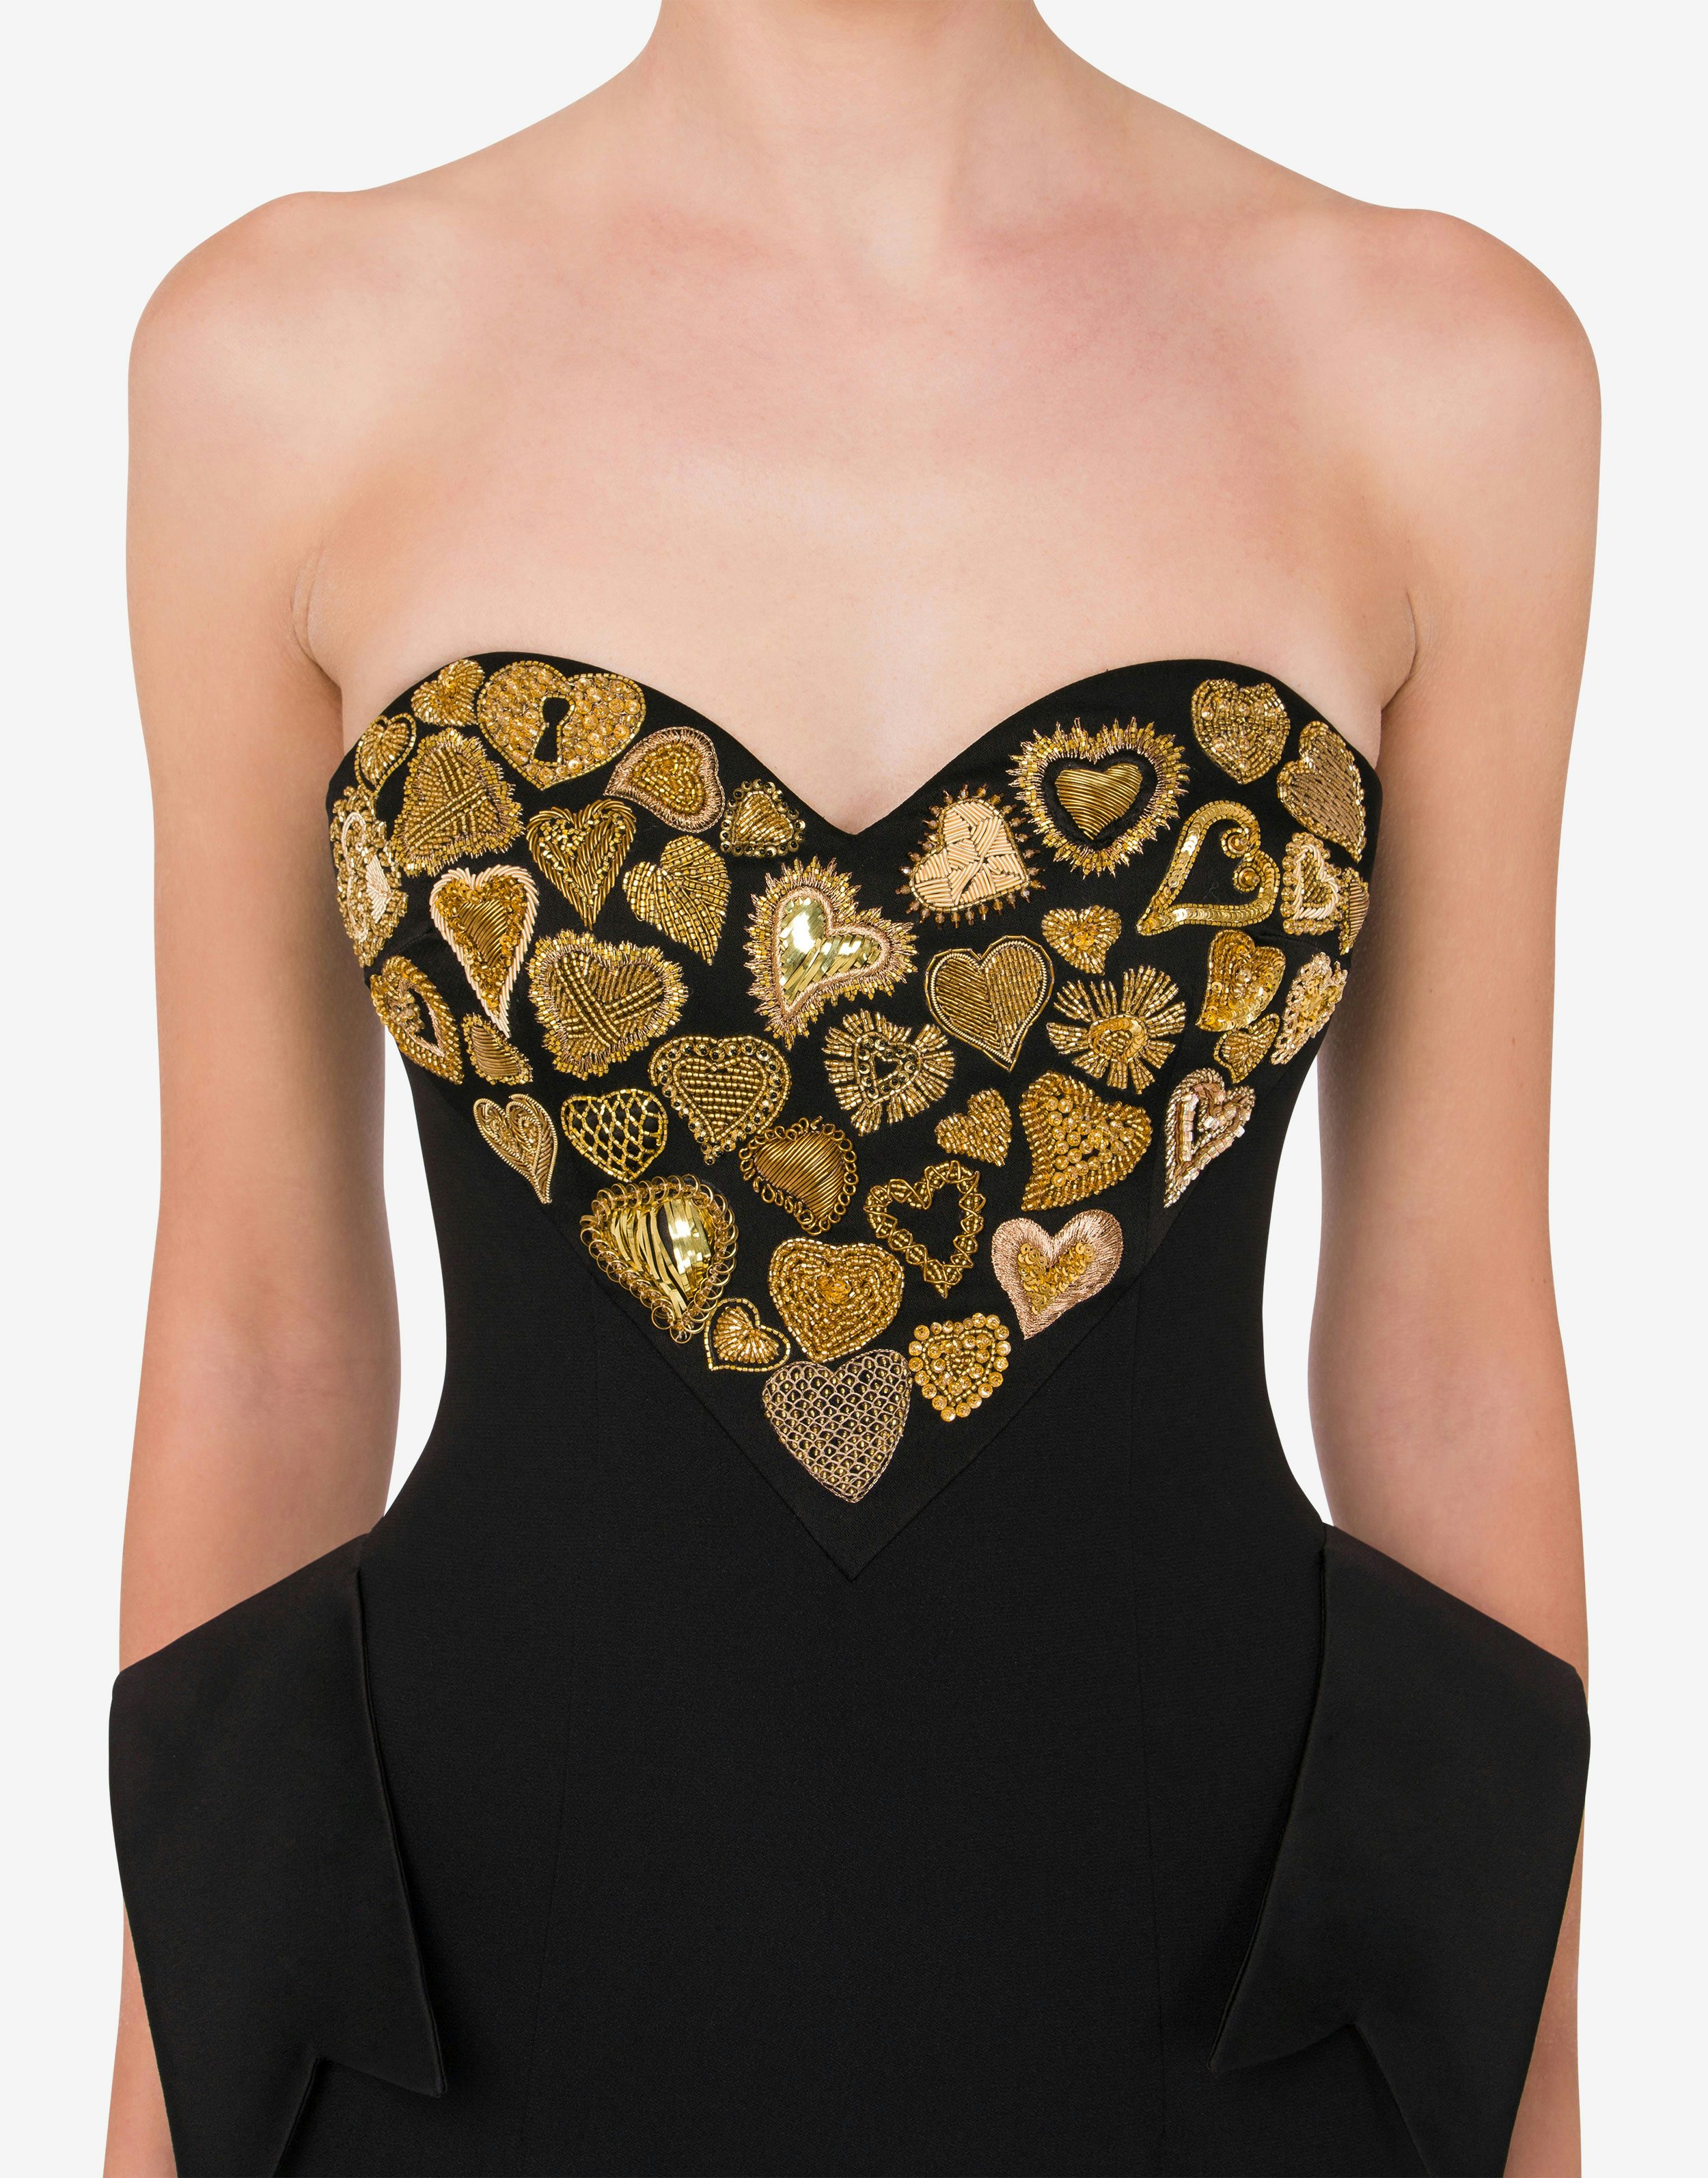 Embellished Hearts corset dress 2